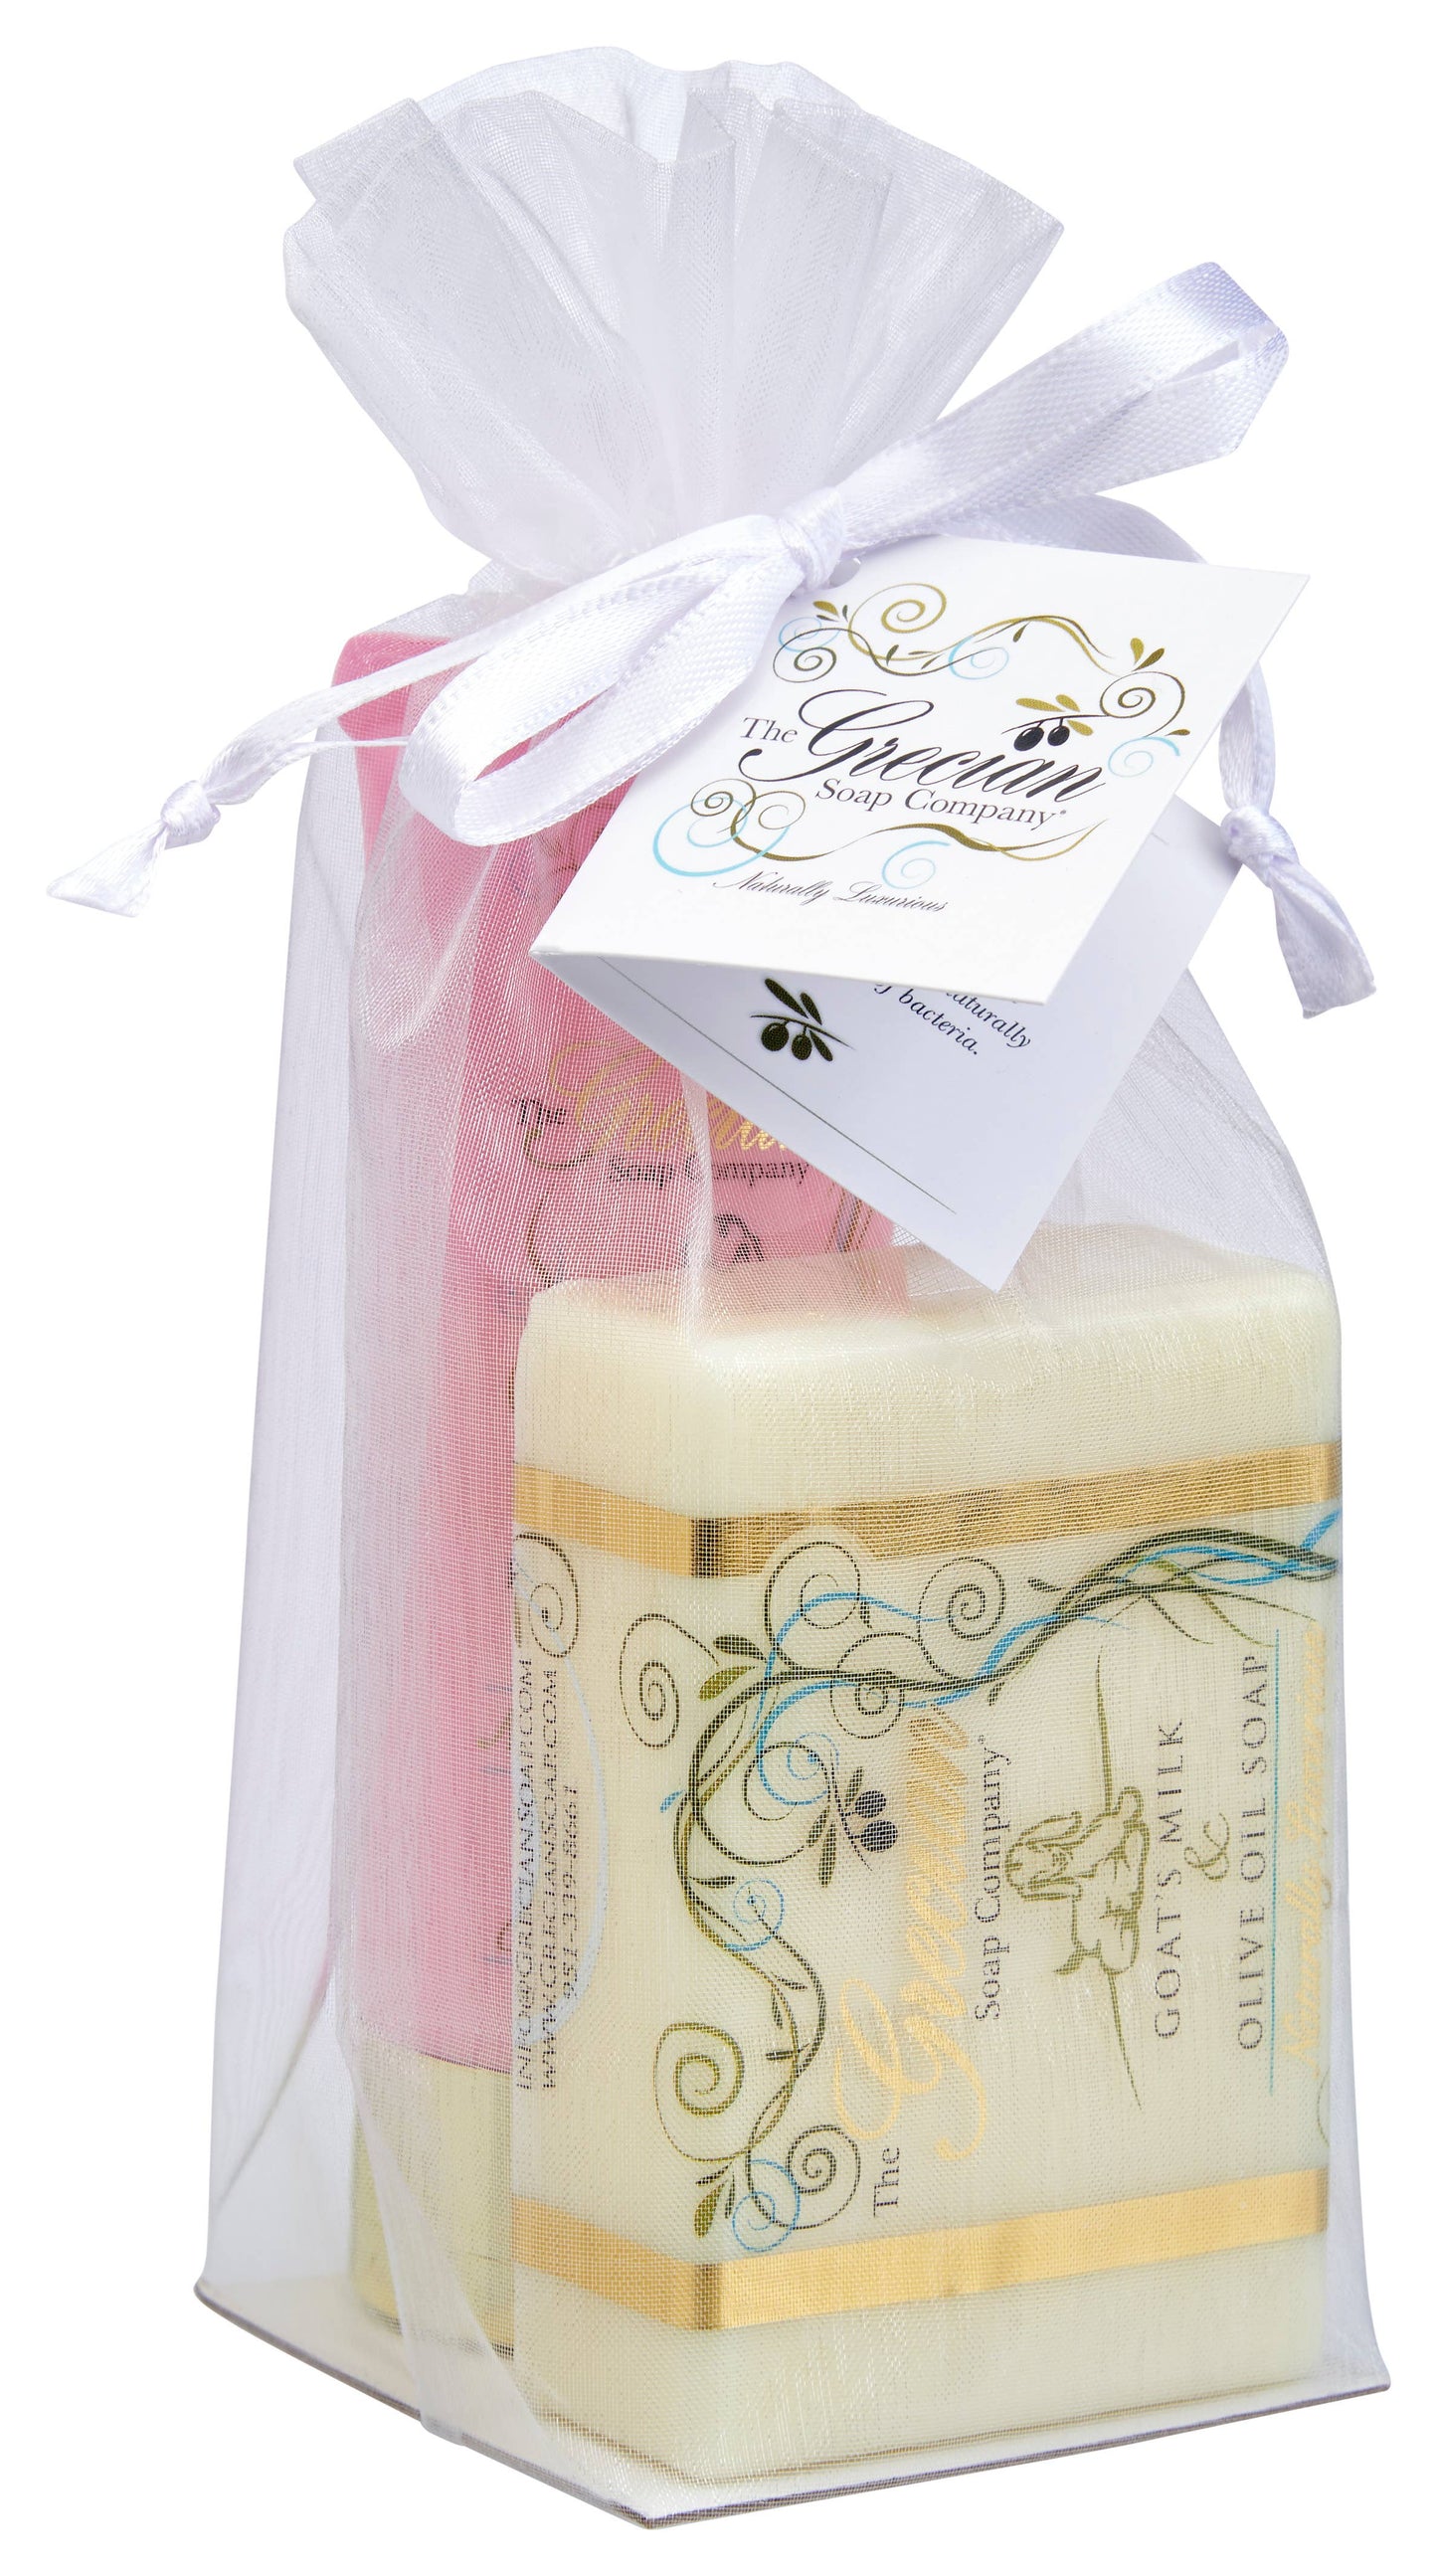 Goat's Milk Soap and Lotion Gift Set: Plumeria